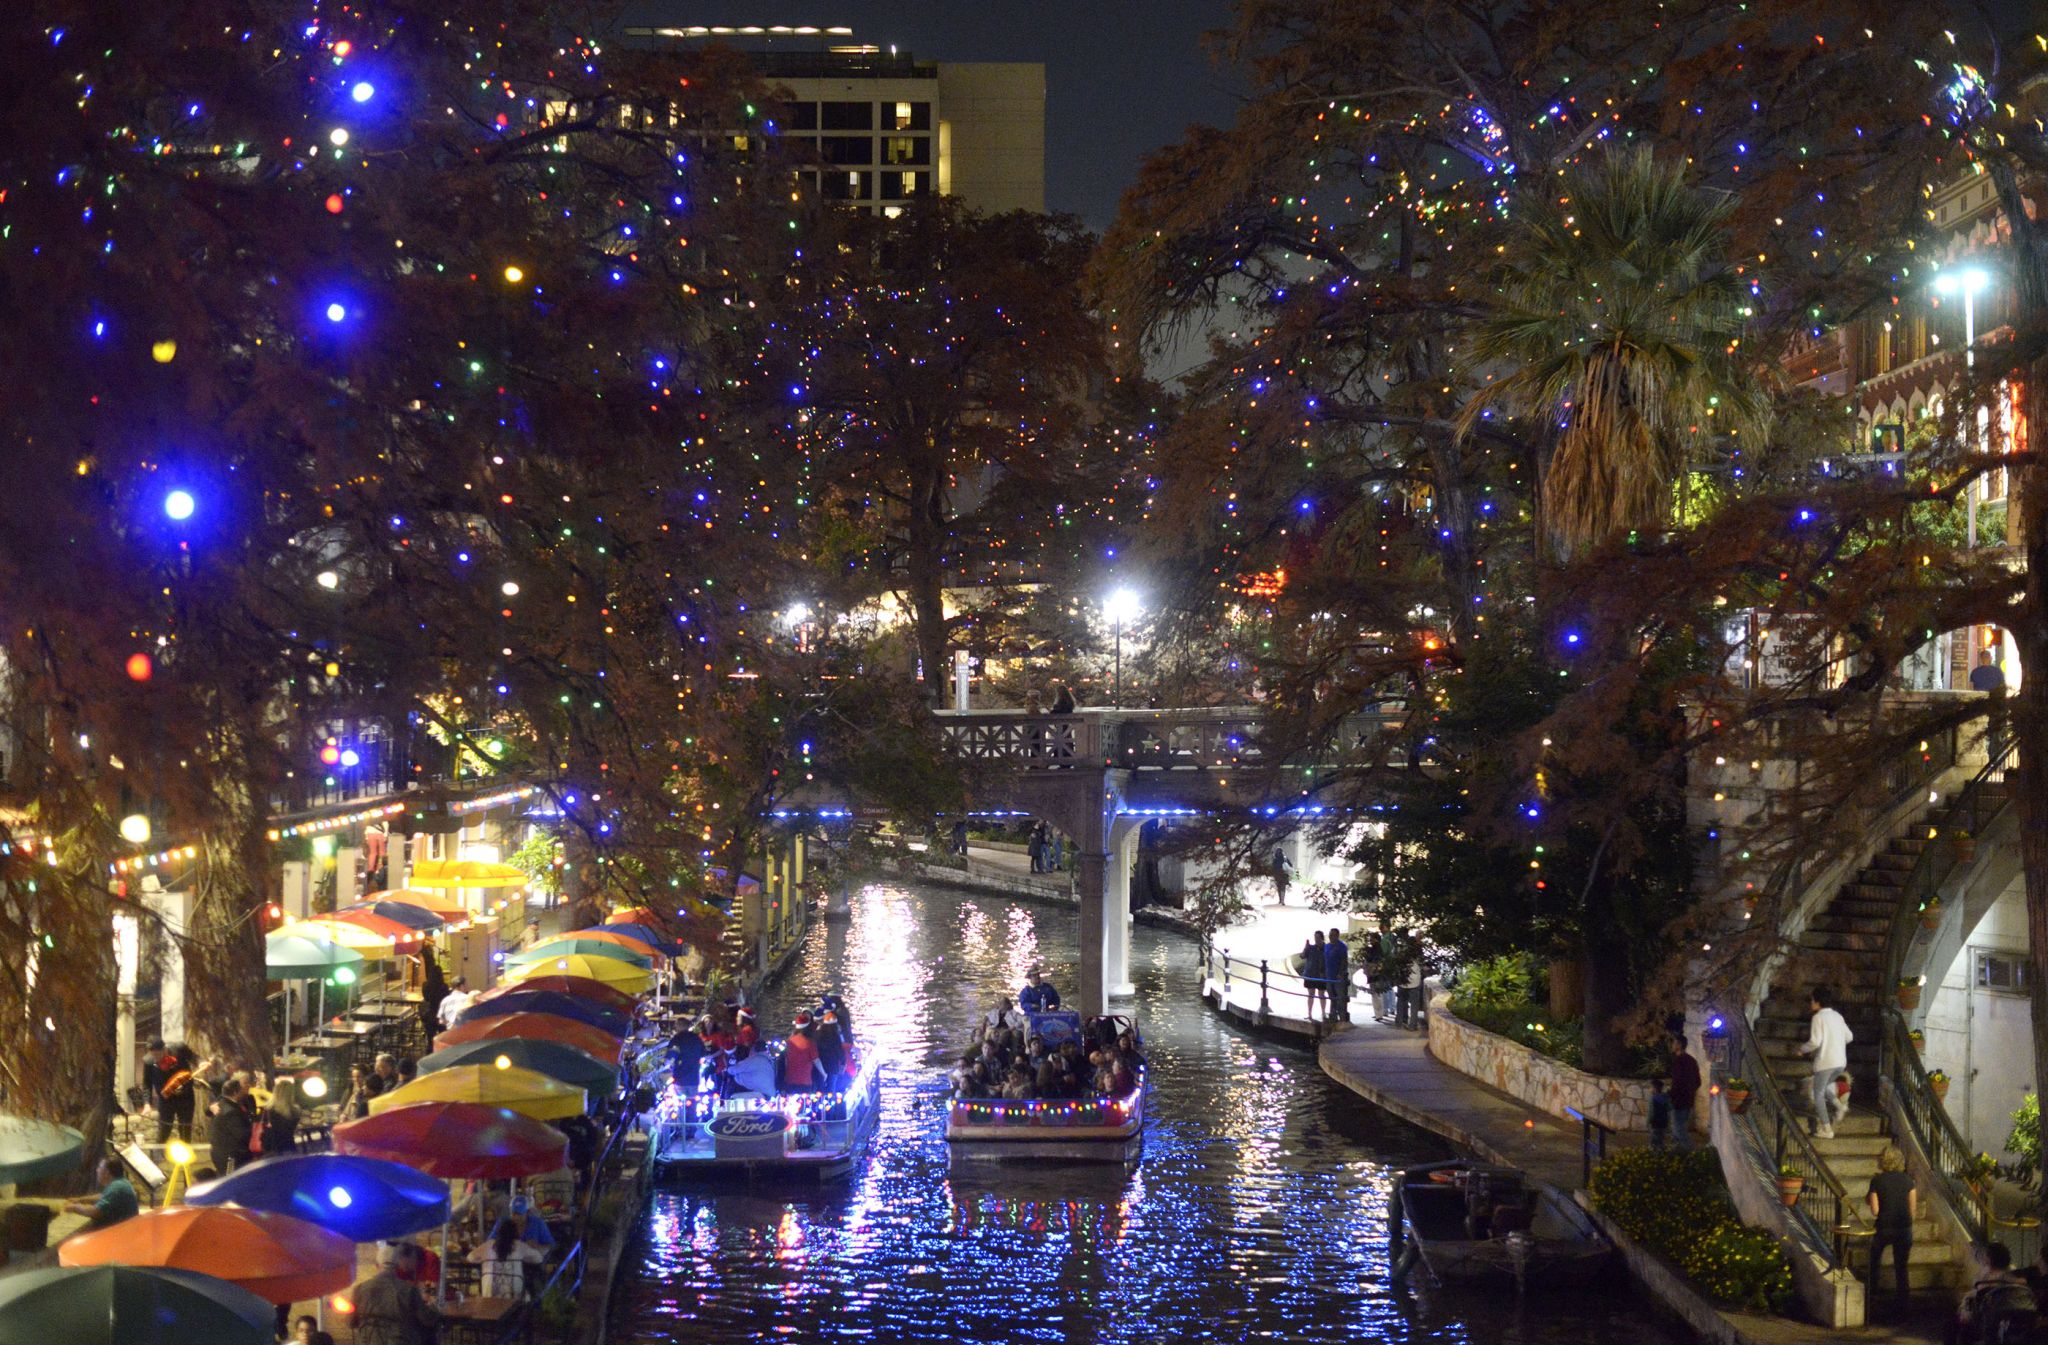 The San Antonio Riverwalk Christmas: 6 Reasons to Visit - That